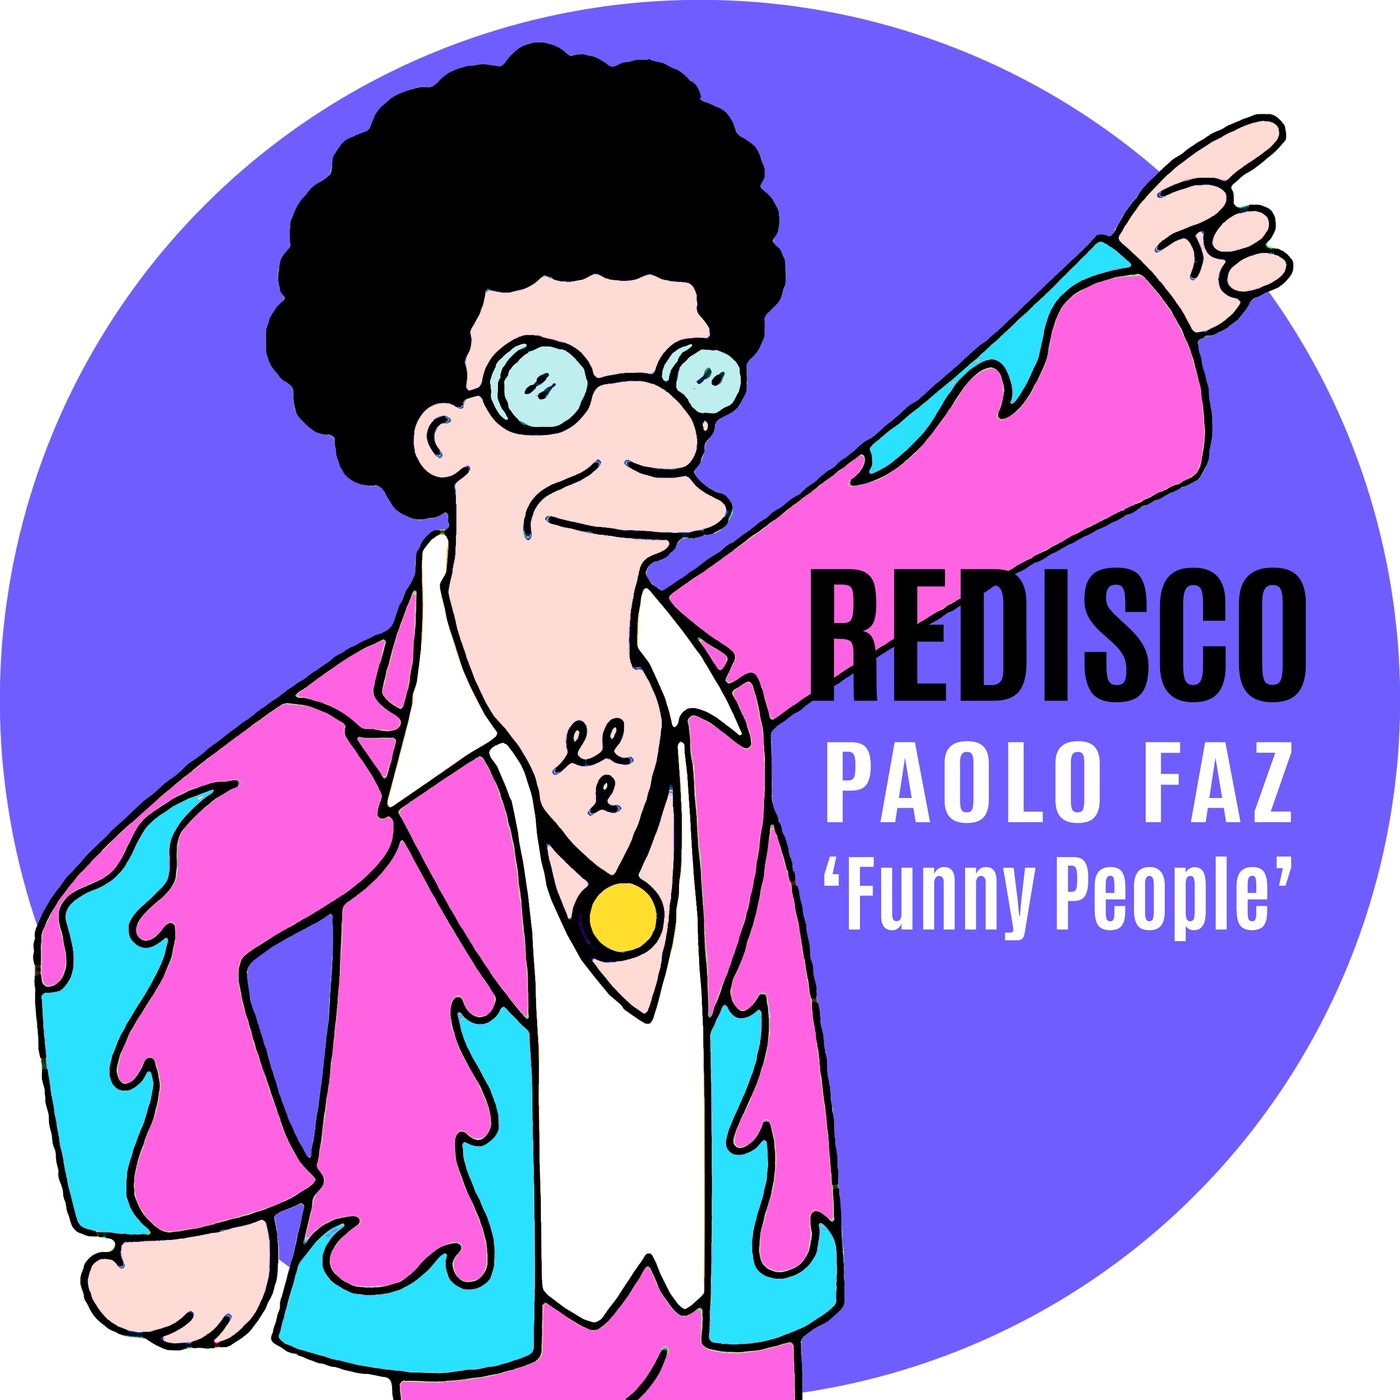 Paolo Faz - Funny People / Redisco